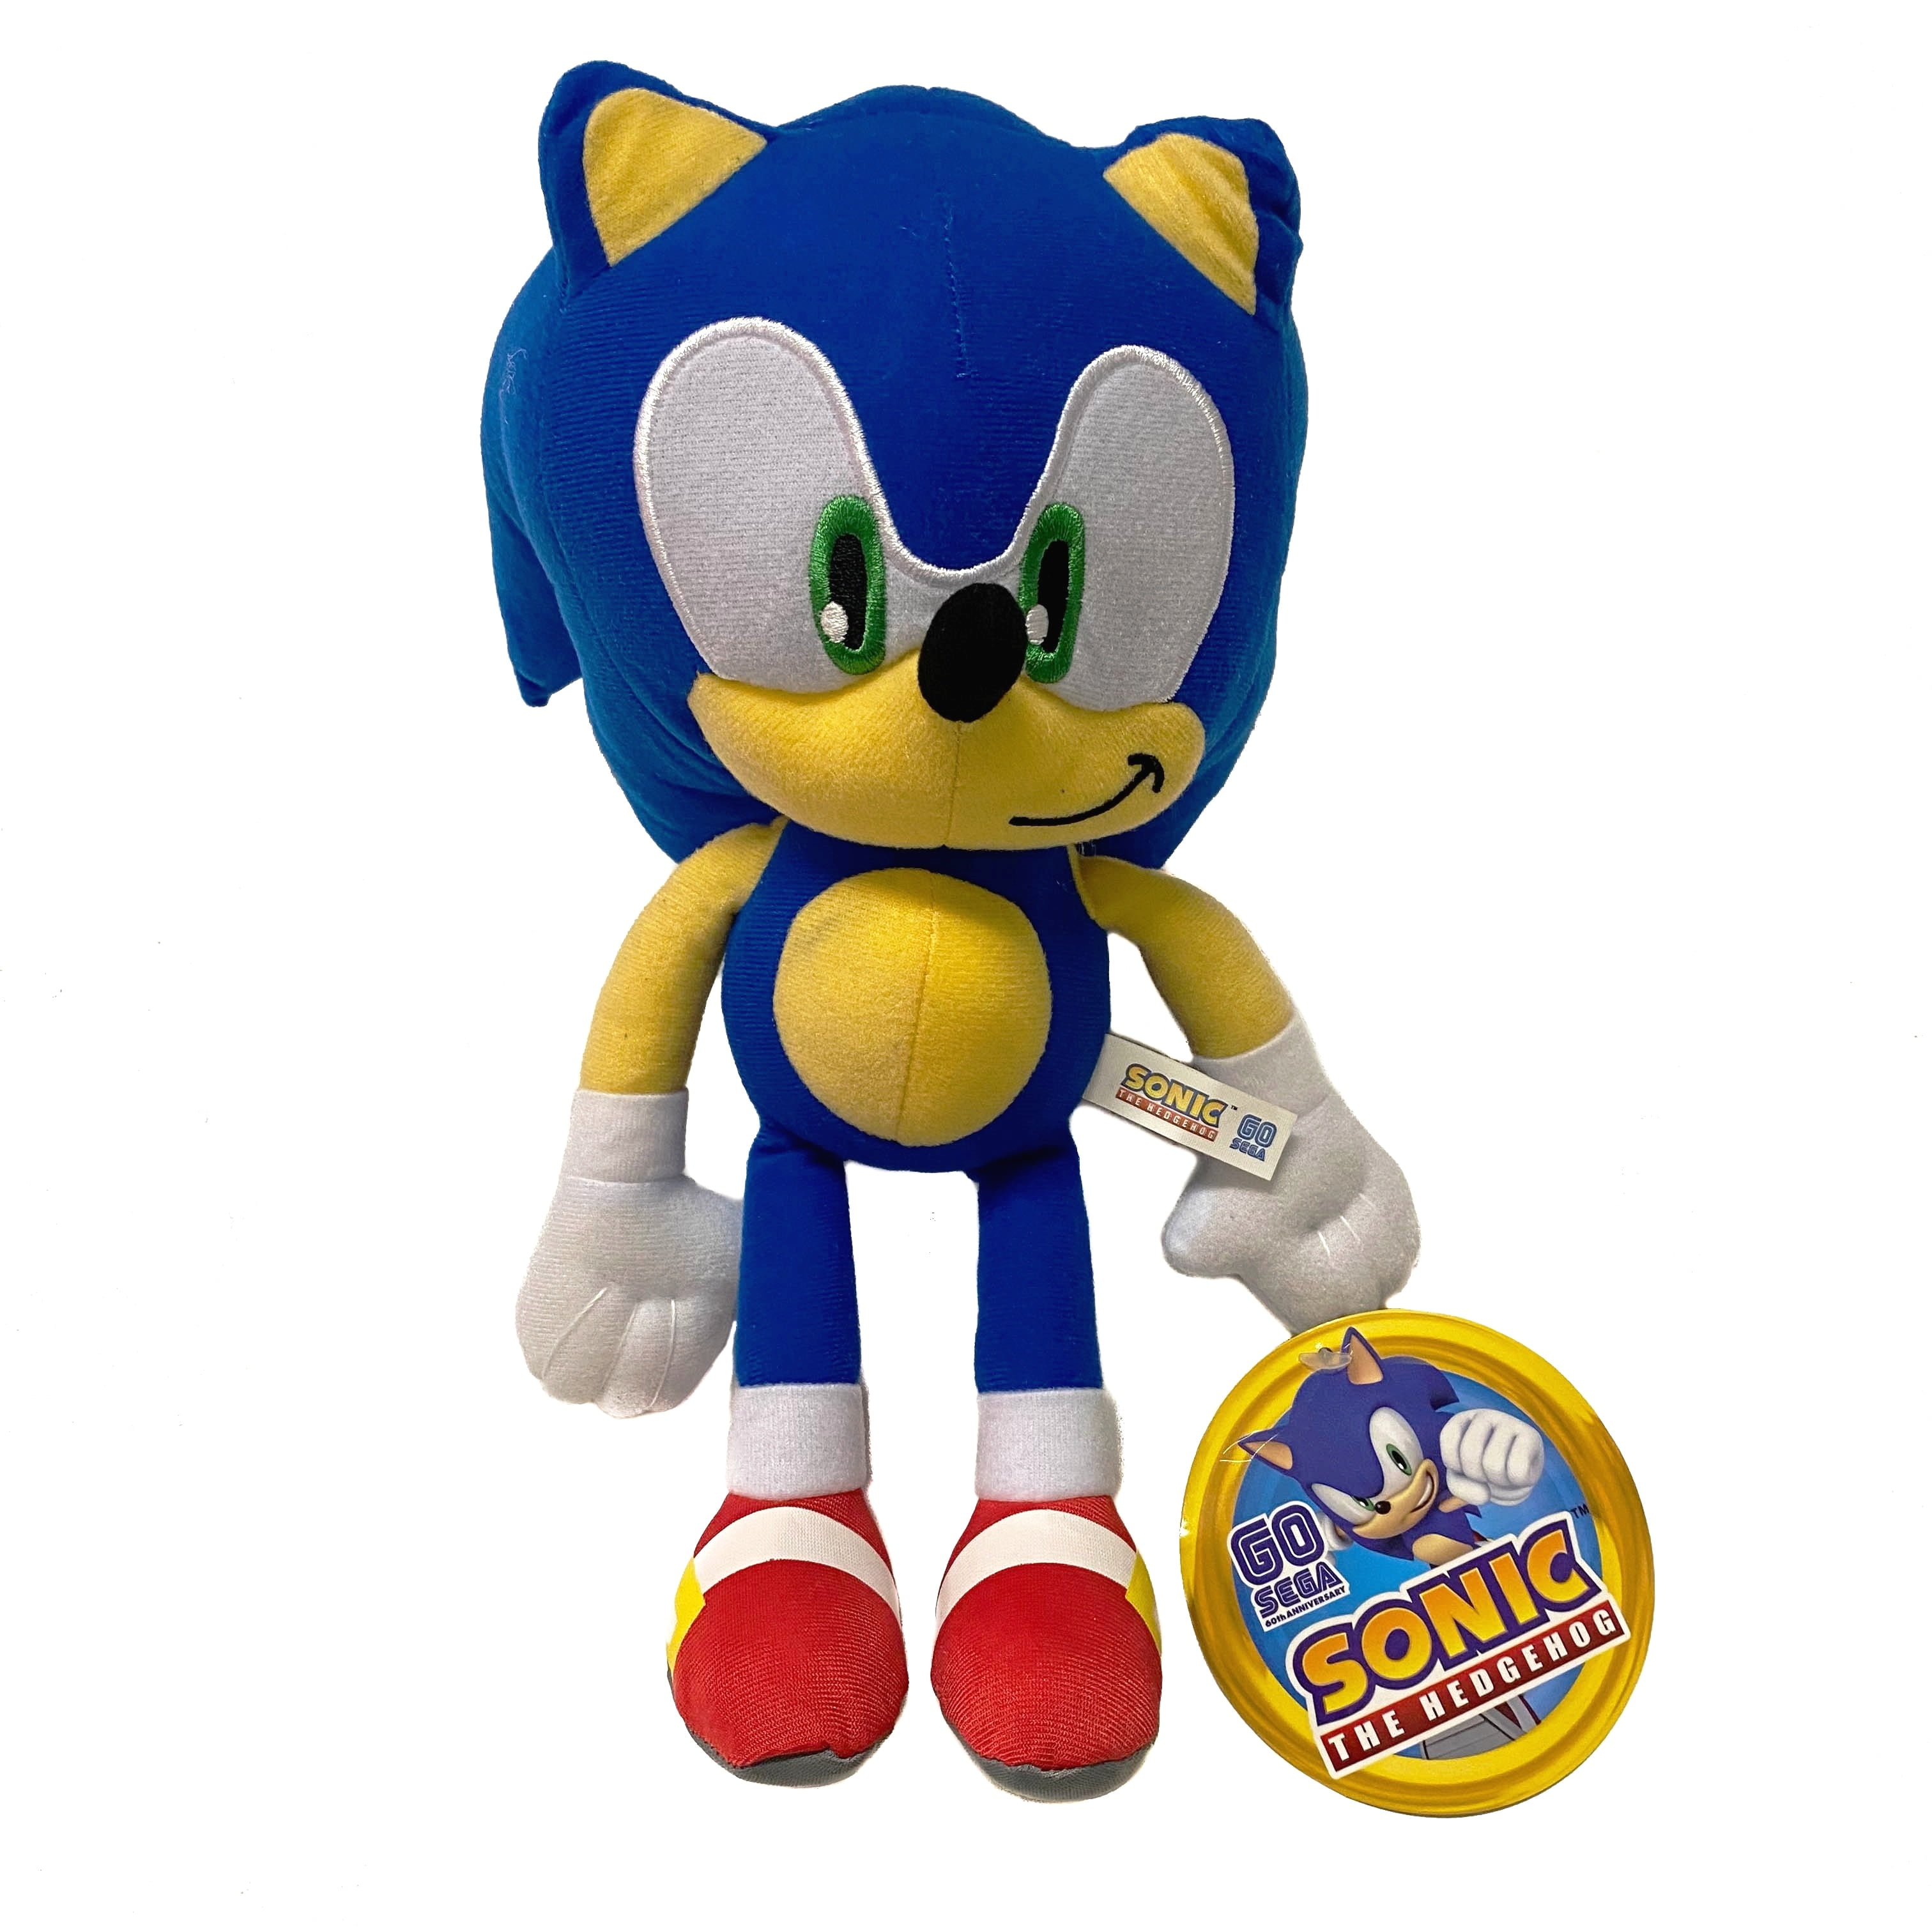 Plush Stuffed Sonic Dolls, Sonic Stuffed Animals, Plush Sonic Baby